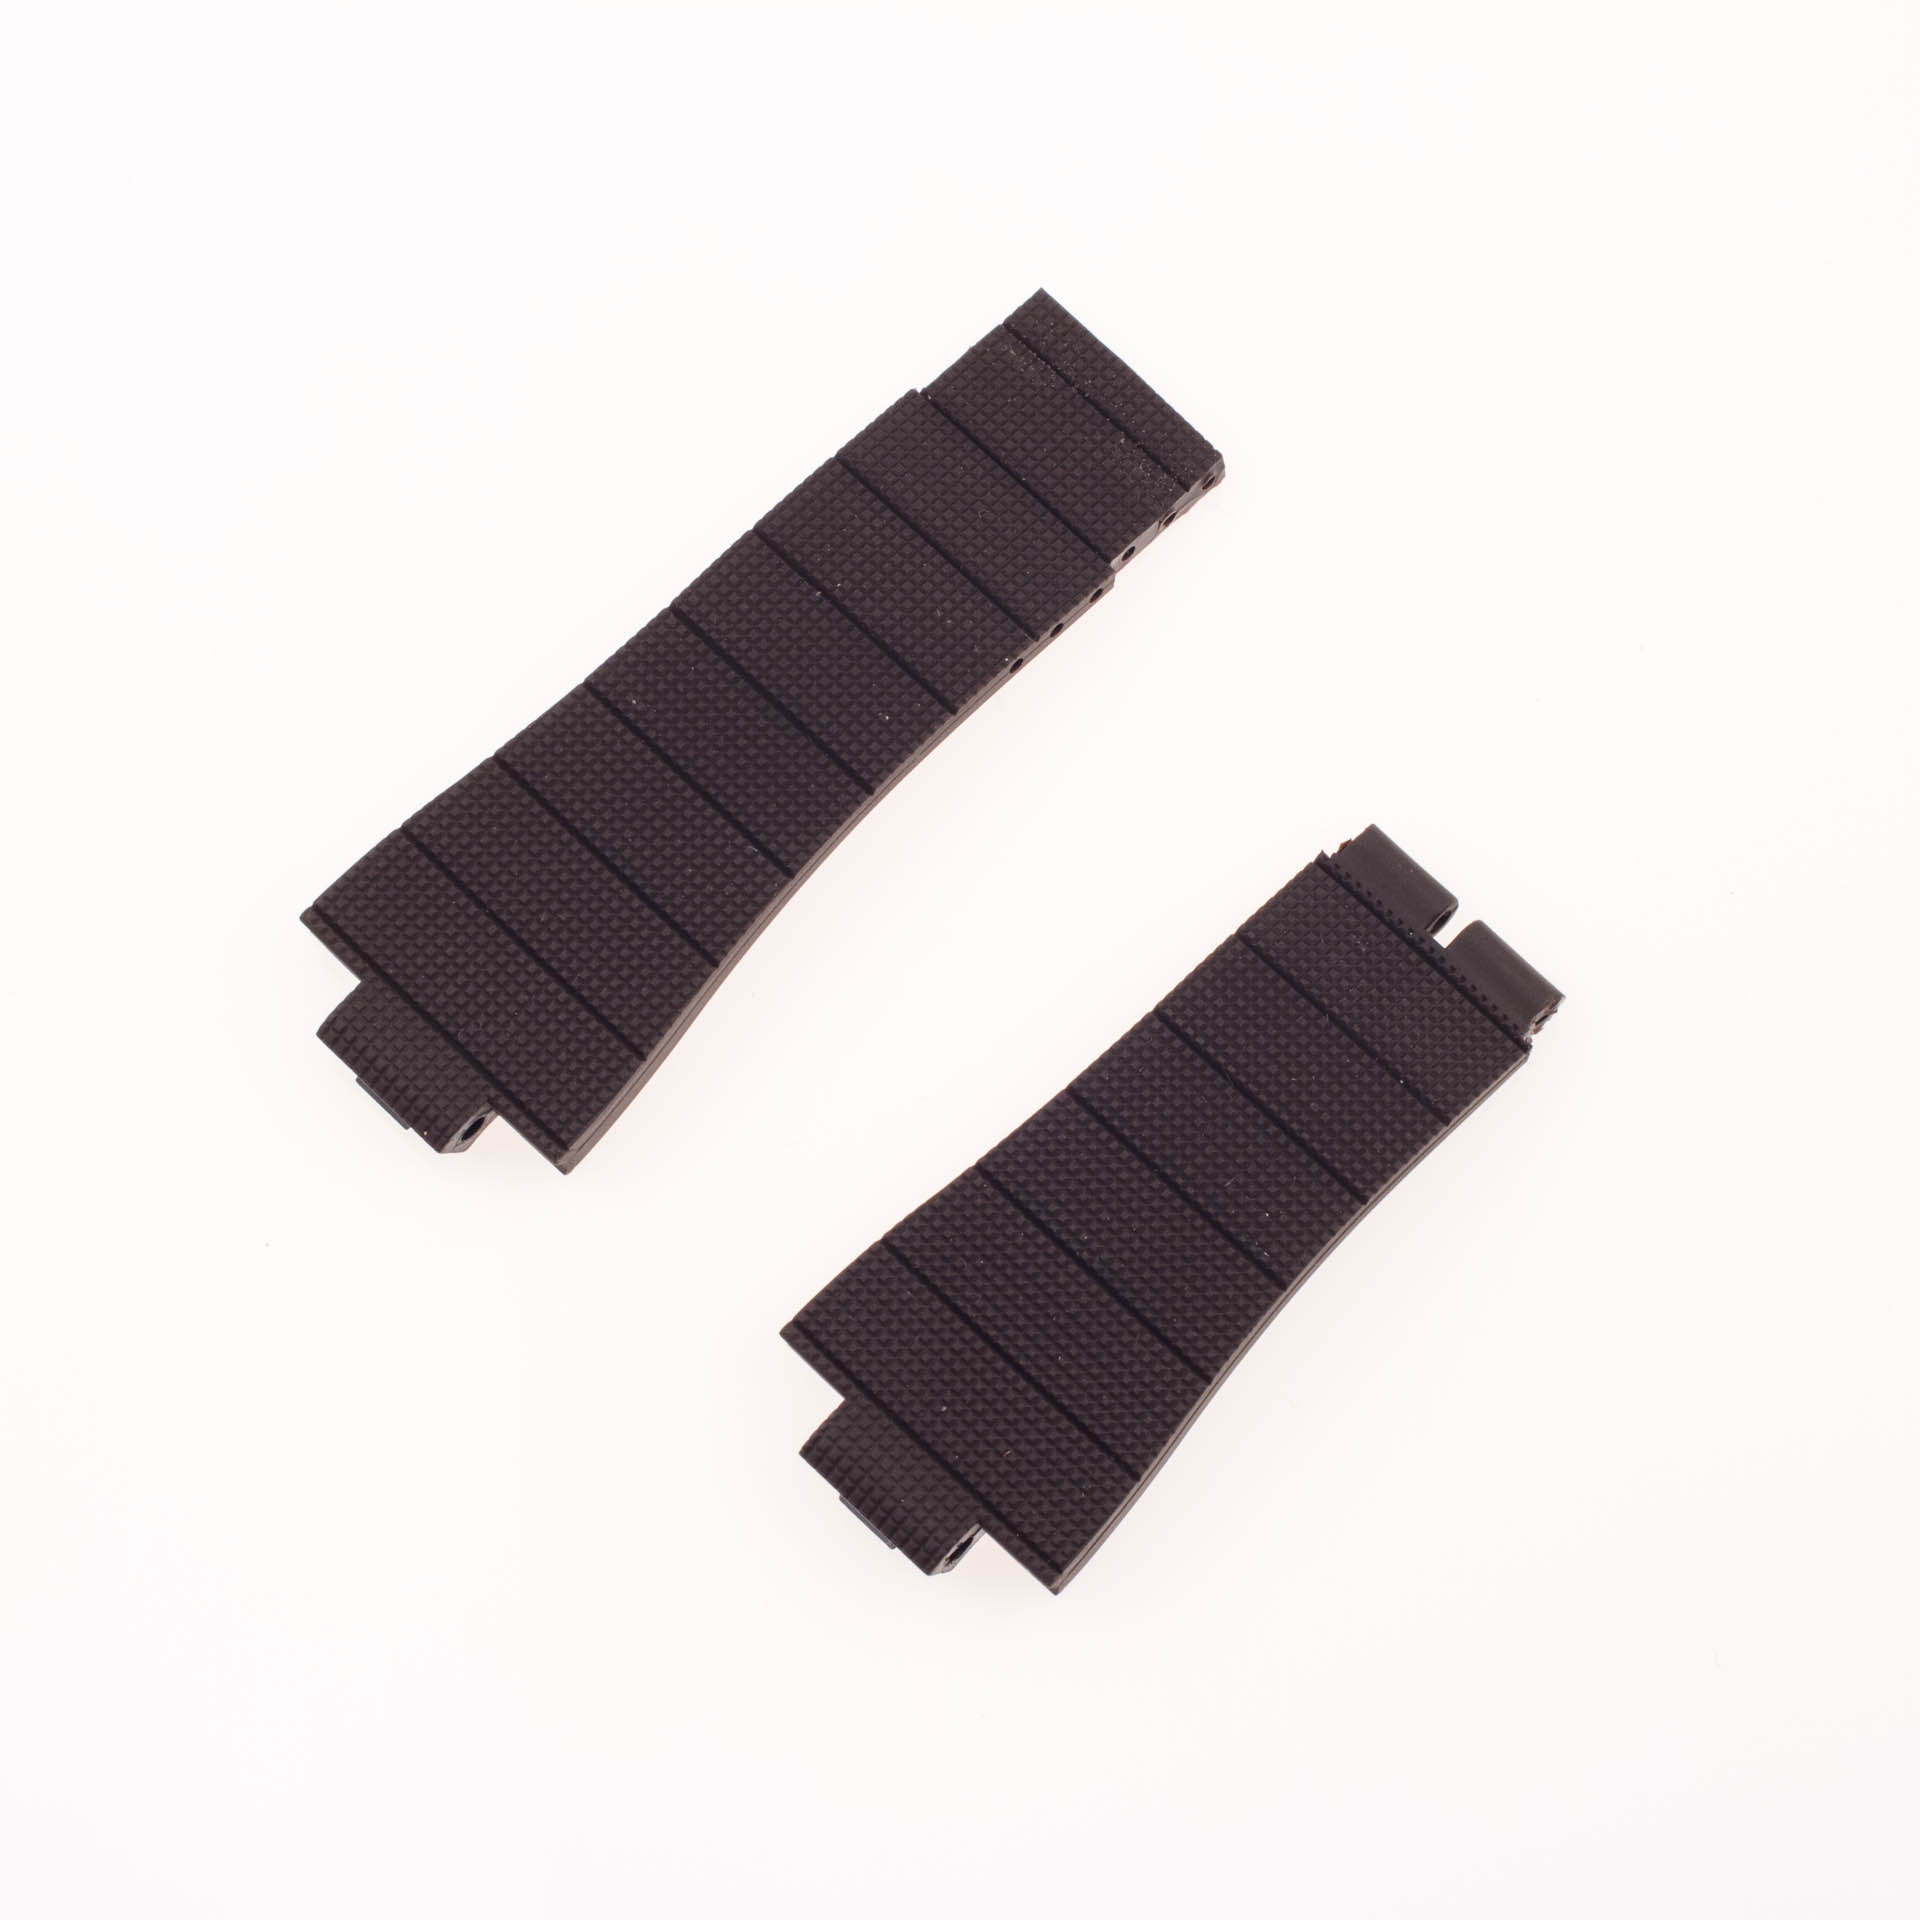 Roger Dubuis Acquamare dark brown rubber strap (27x21) image 1